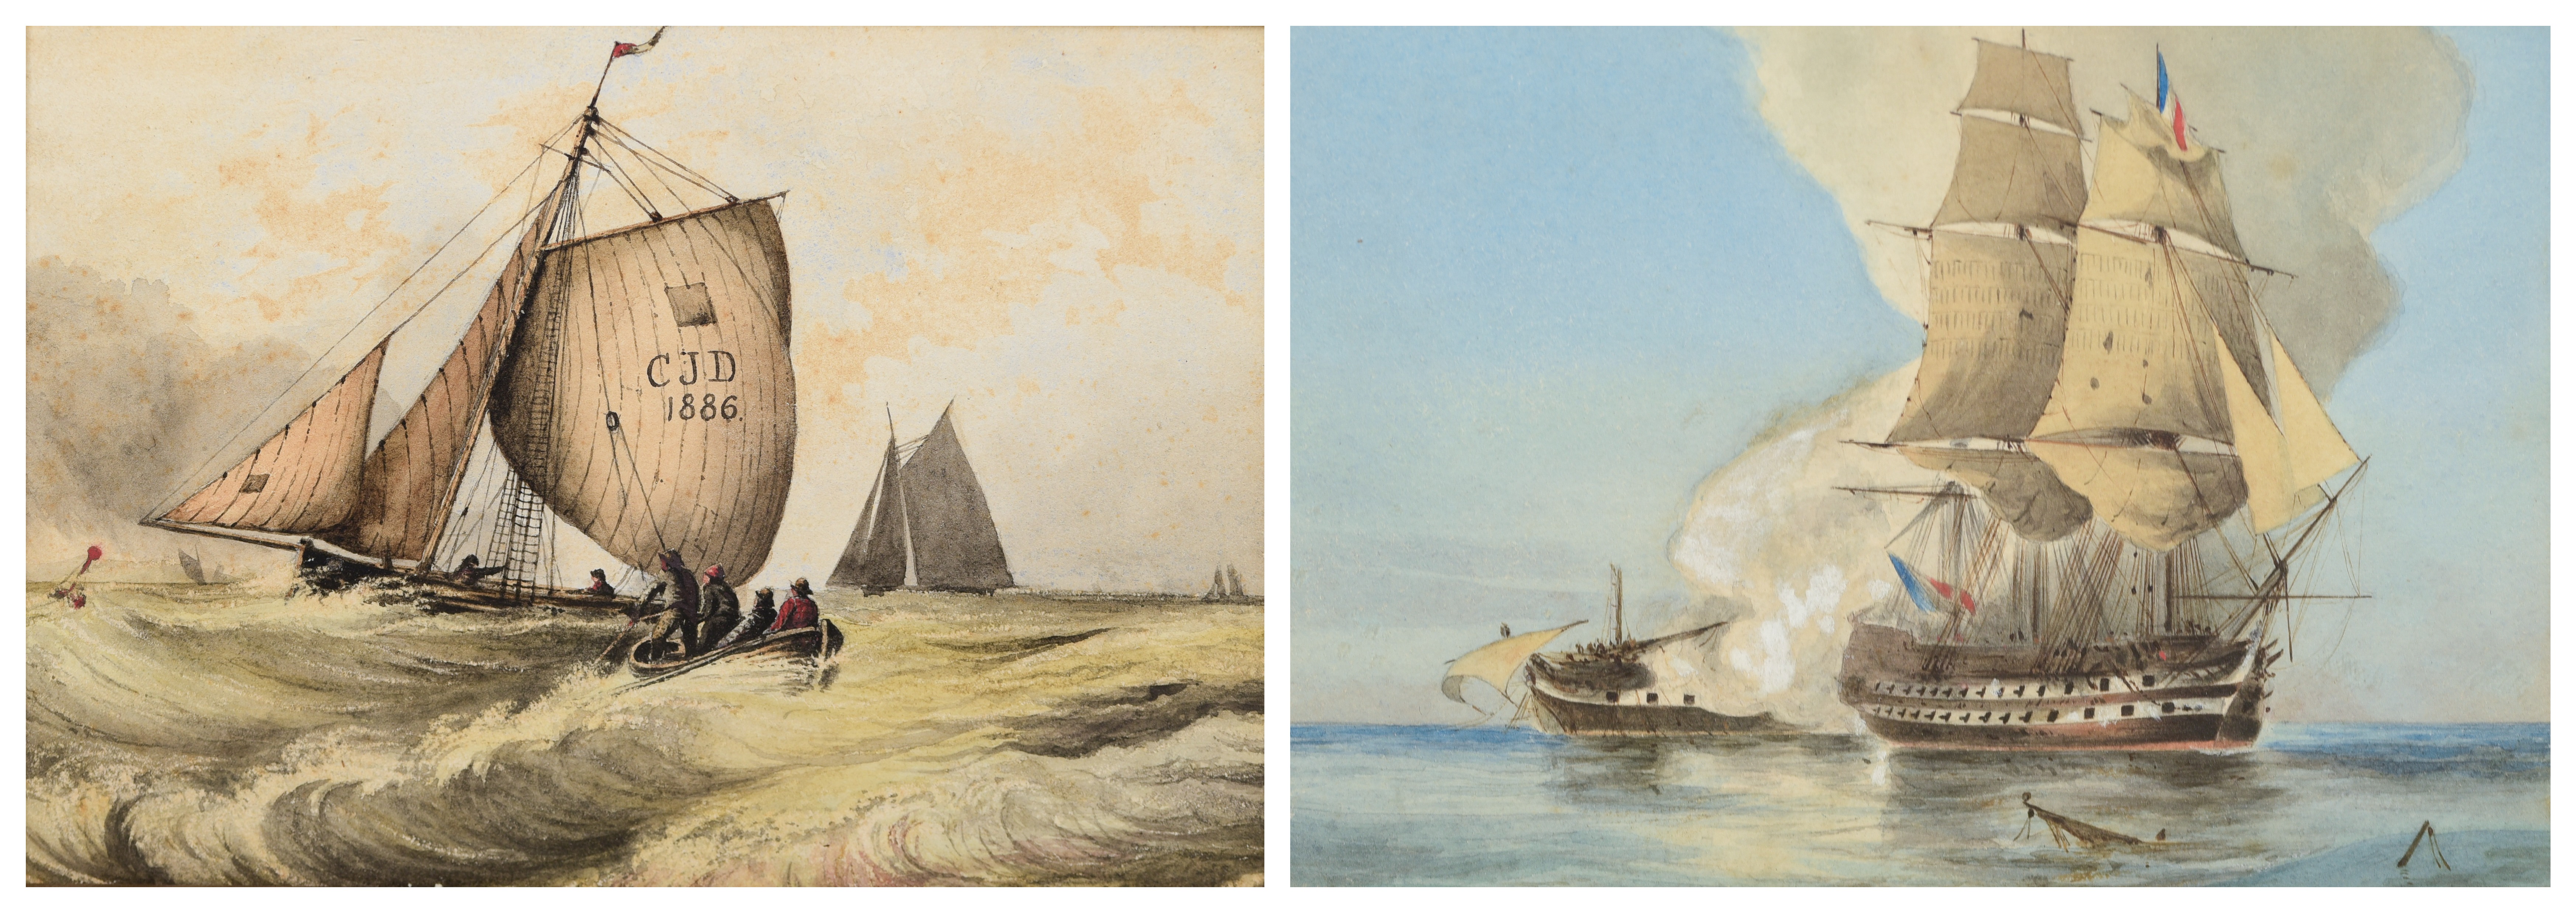  2 Antique marine watercolor paintings  3b0fd6